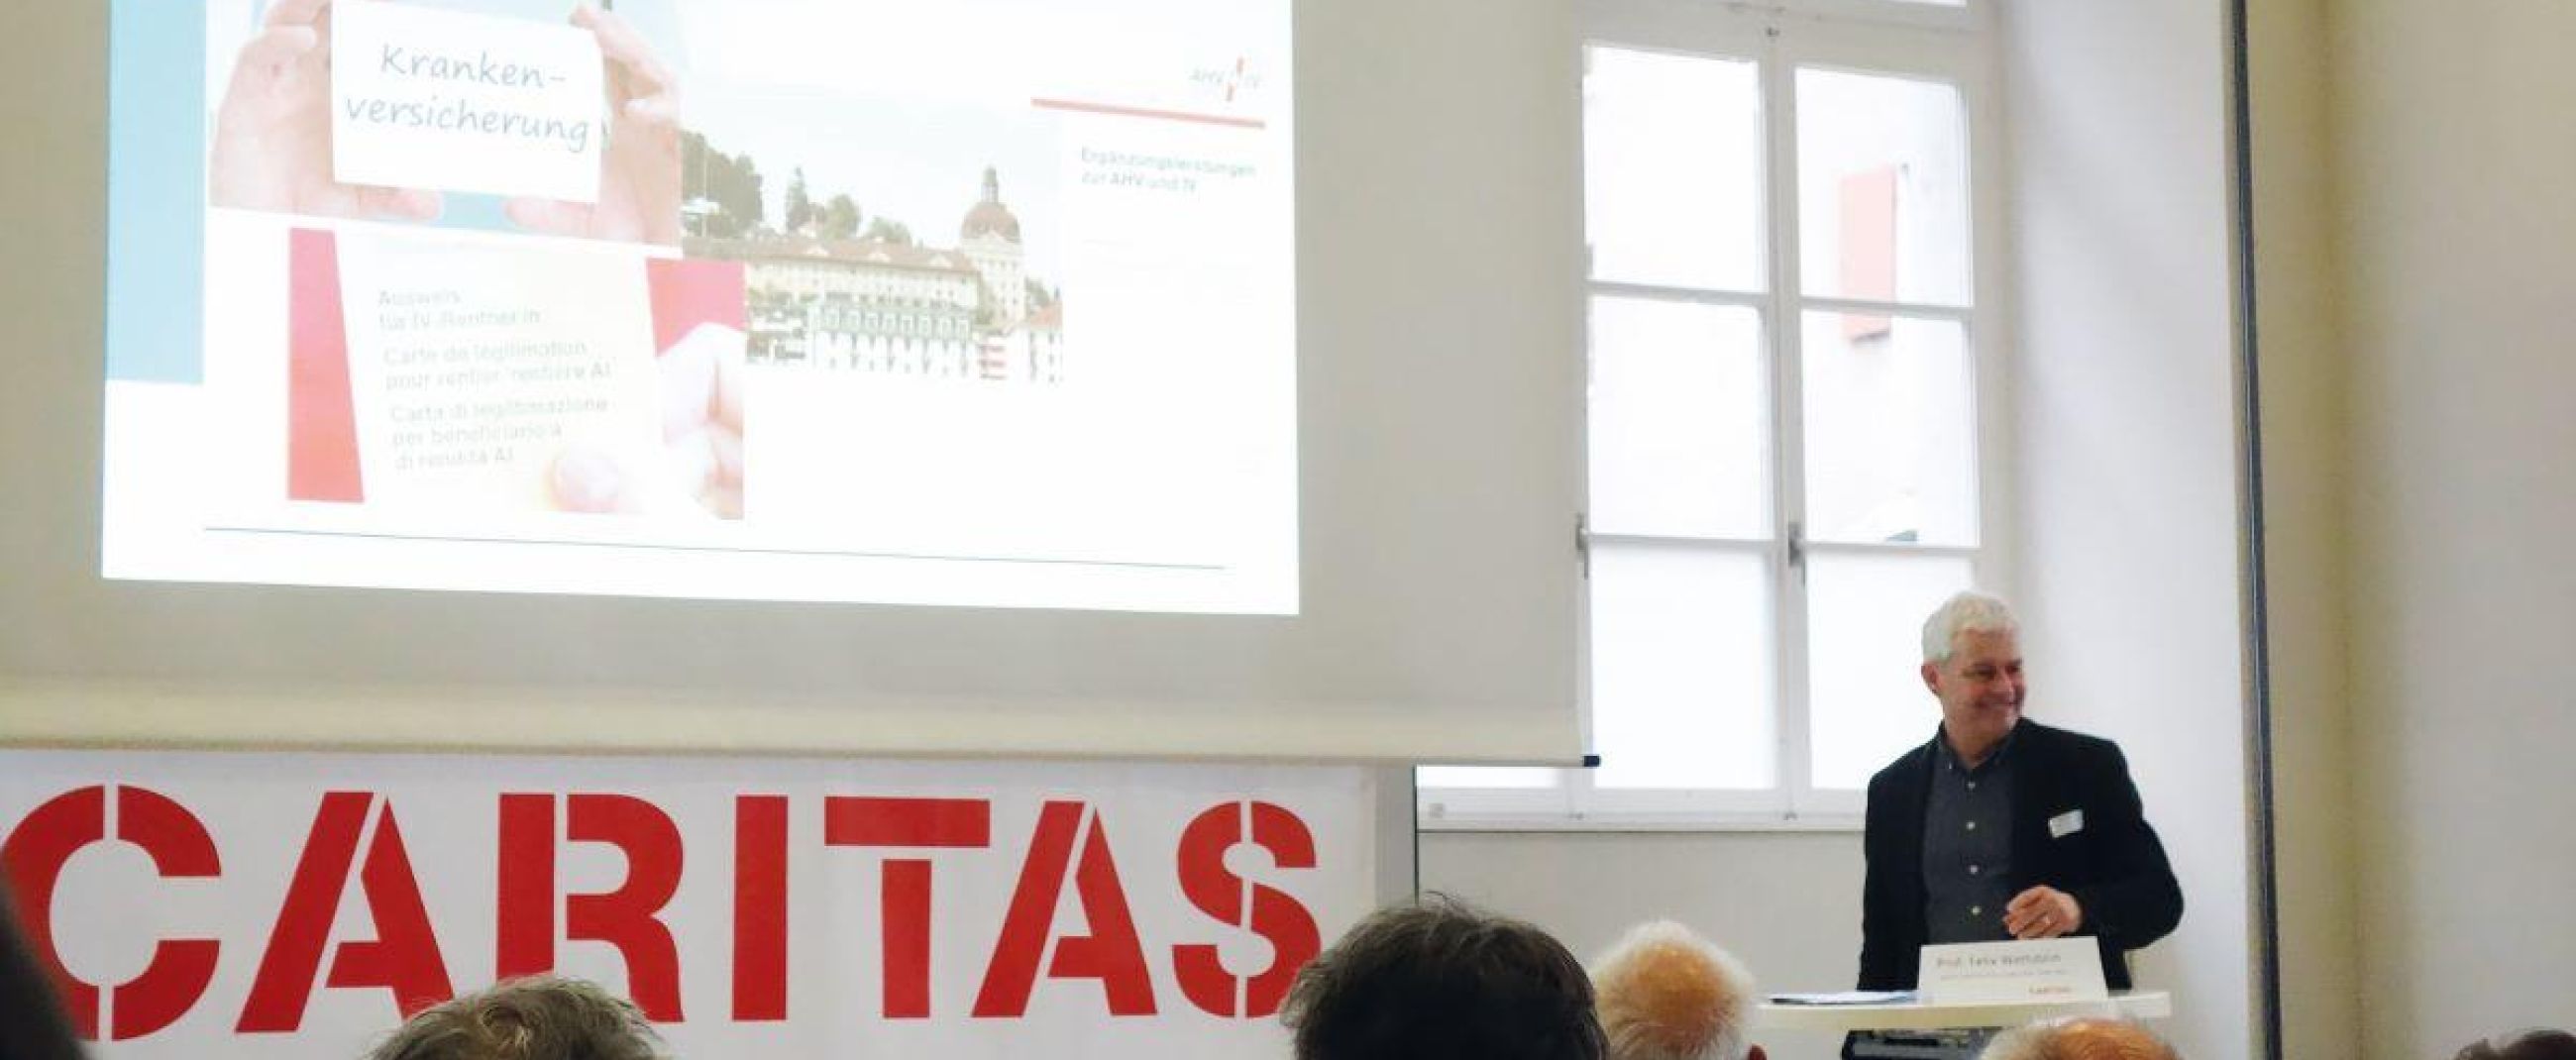 Caritas solothurn forum 2019 wettstein